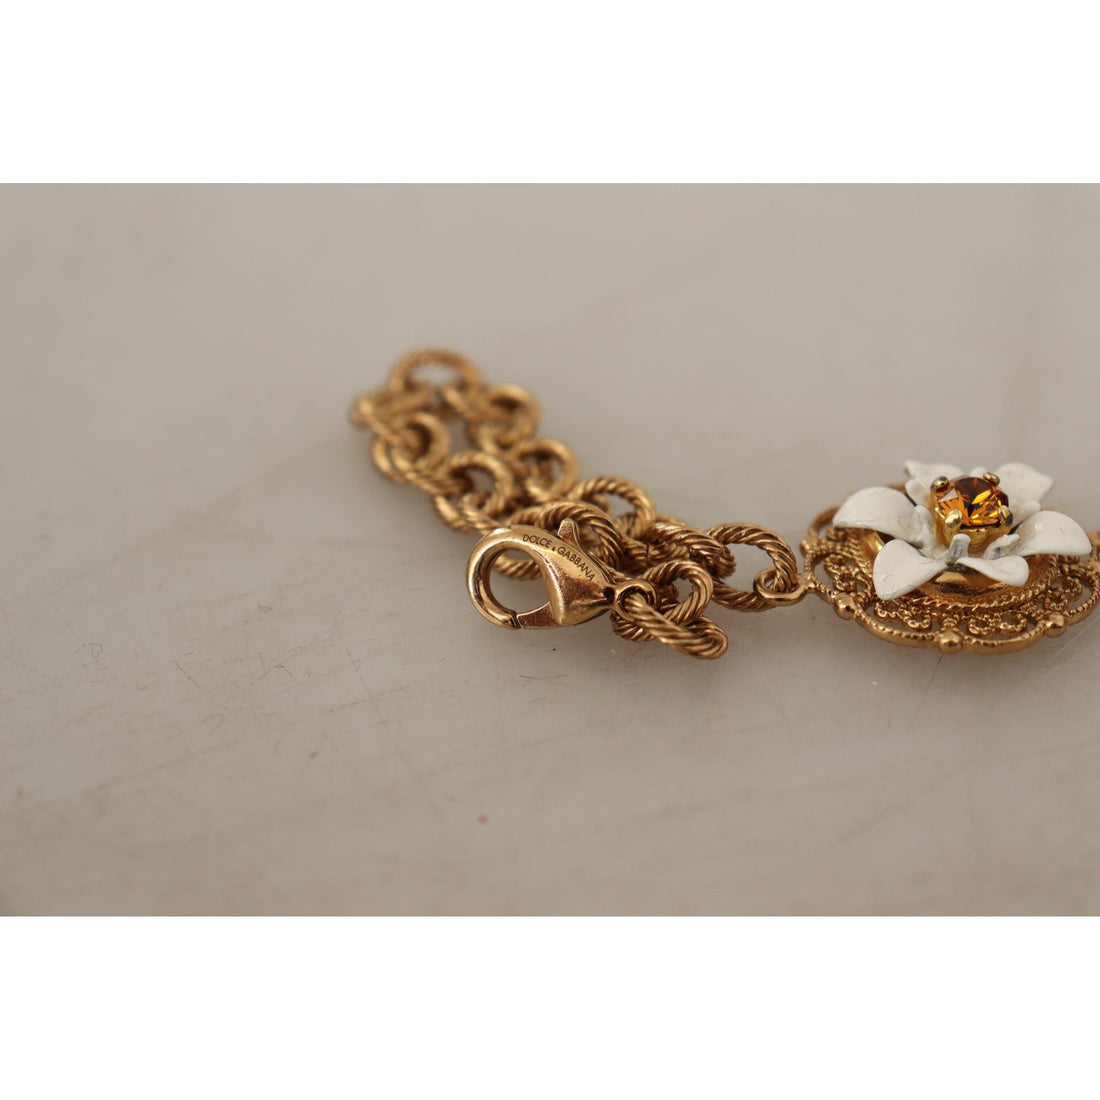 Dolce & Gabbana Elegant Floral Statement Necklace